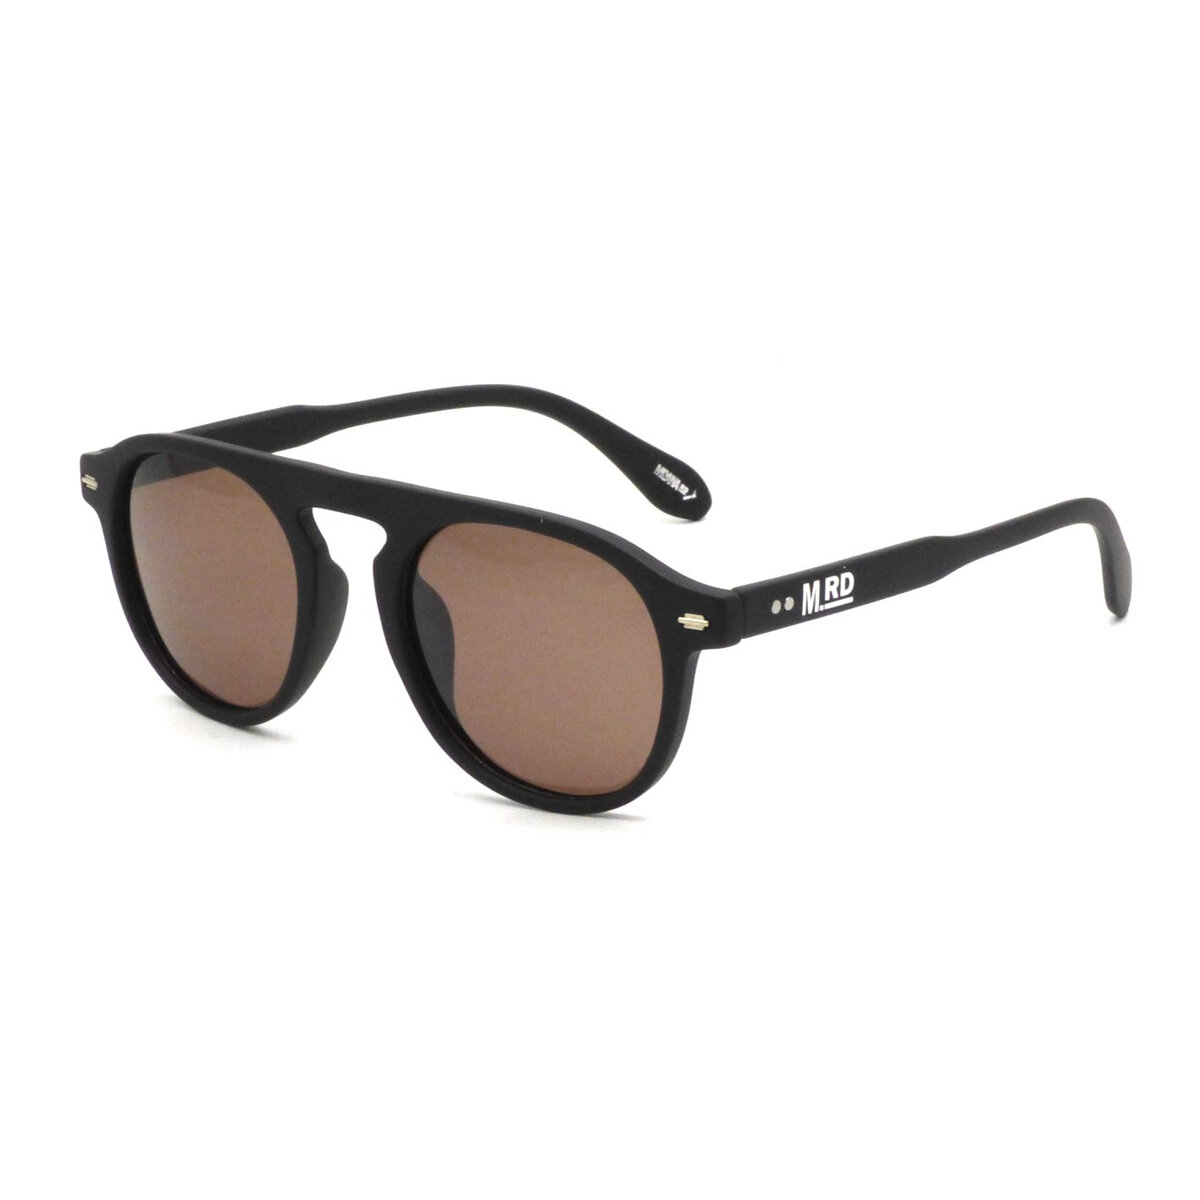 Moana Road Sunglasses + Free Case!, Chandlers Black 3825